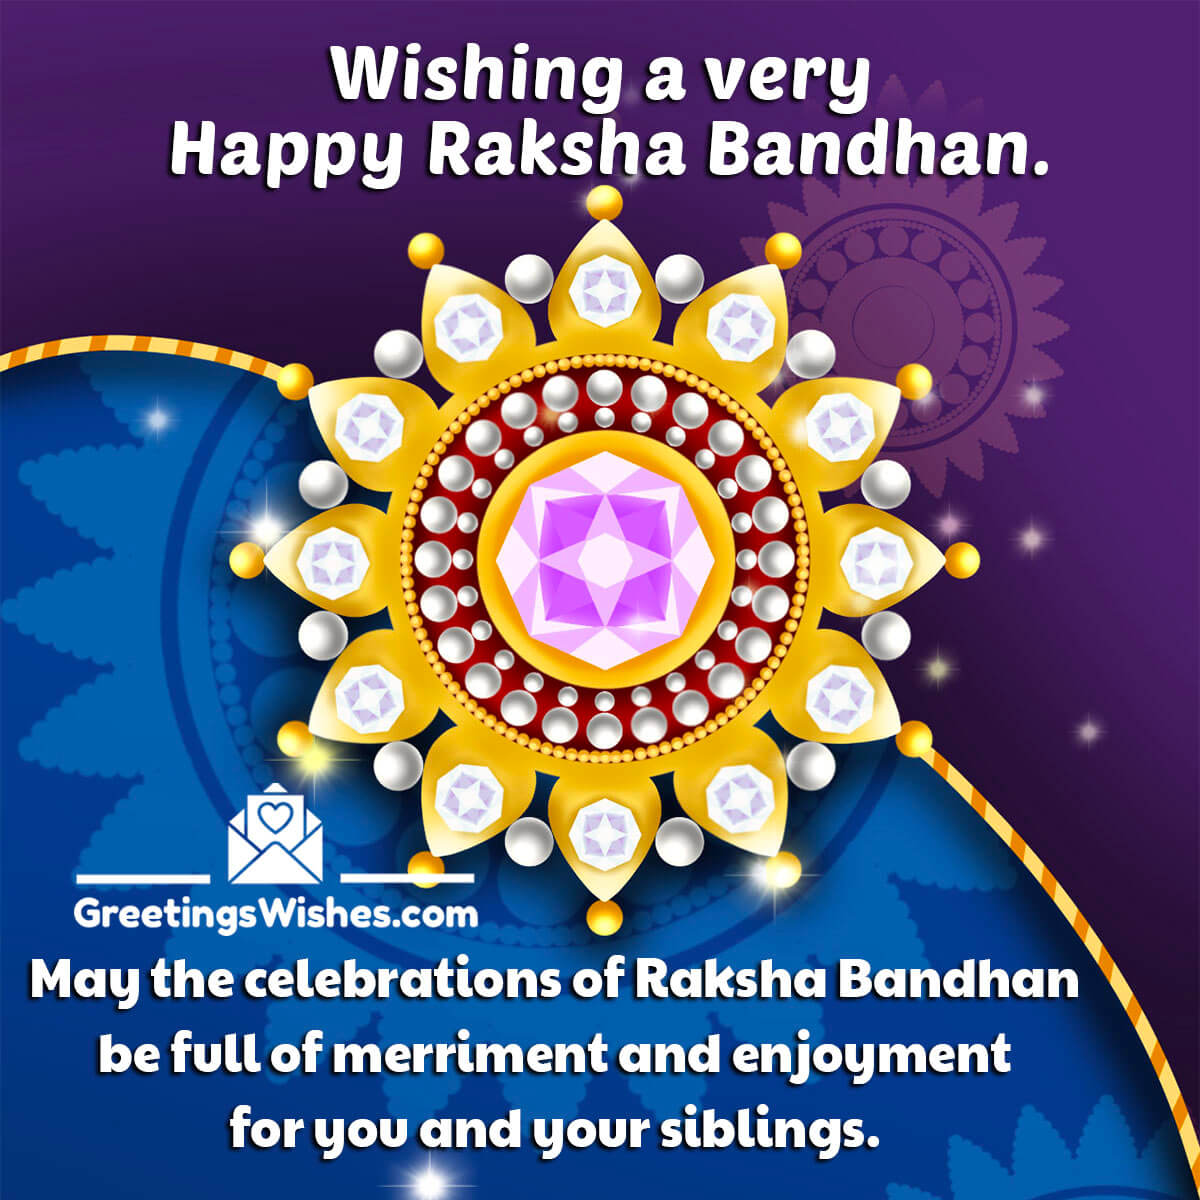 Wishing A Very Happy Raksha Bandhan